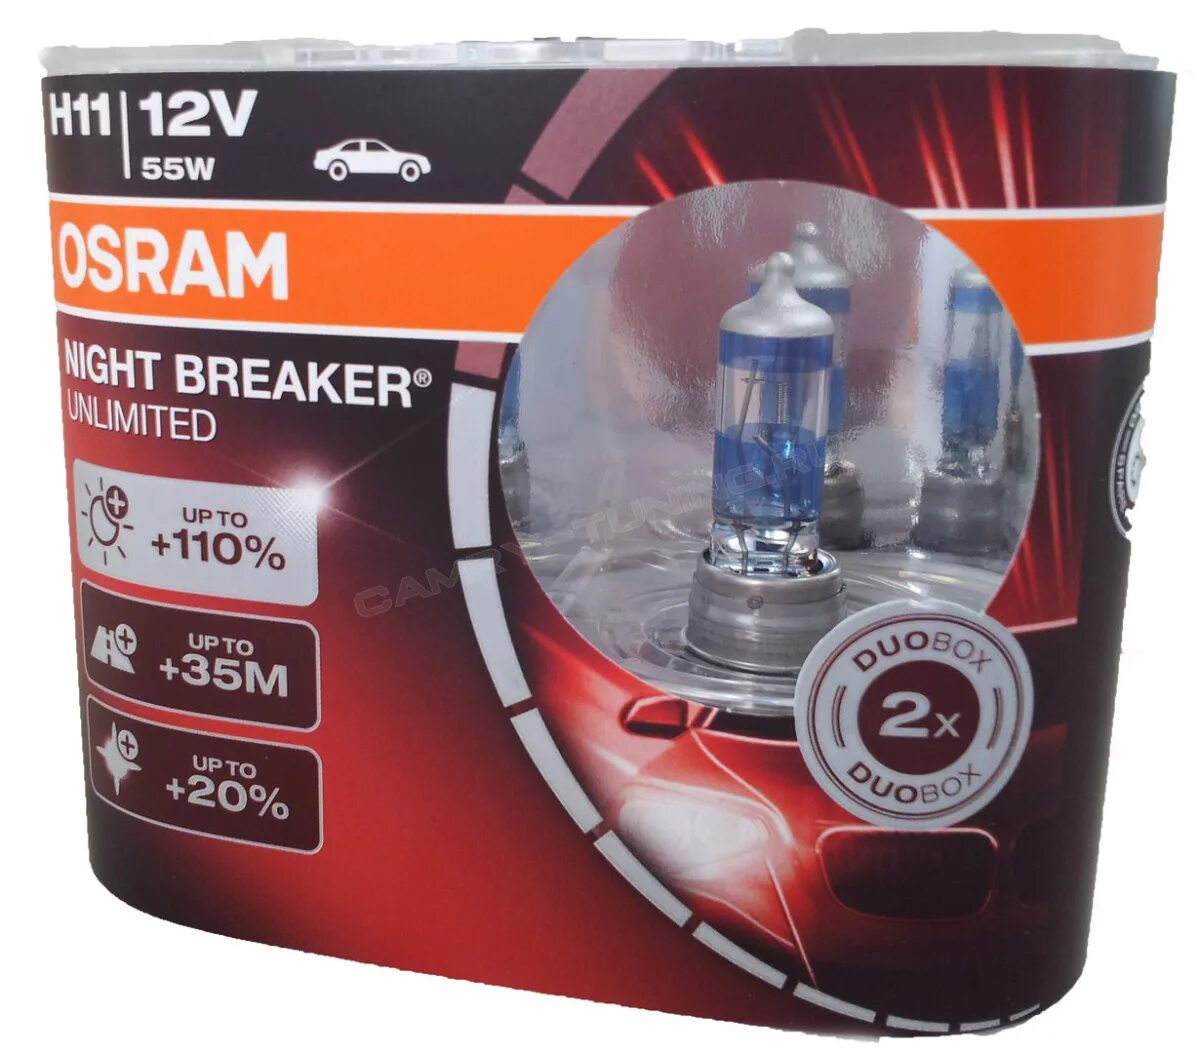 H11 12v купить. Лампа Осрам h11 Найт брекер. Osram Night Breaker Unlimited h11. Osram h11 +150. Лампа н11 Осрам стандарт.